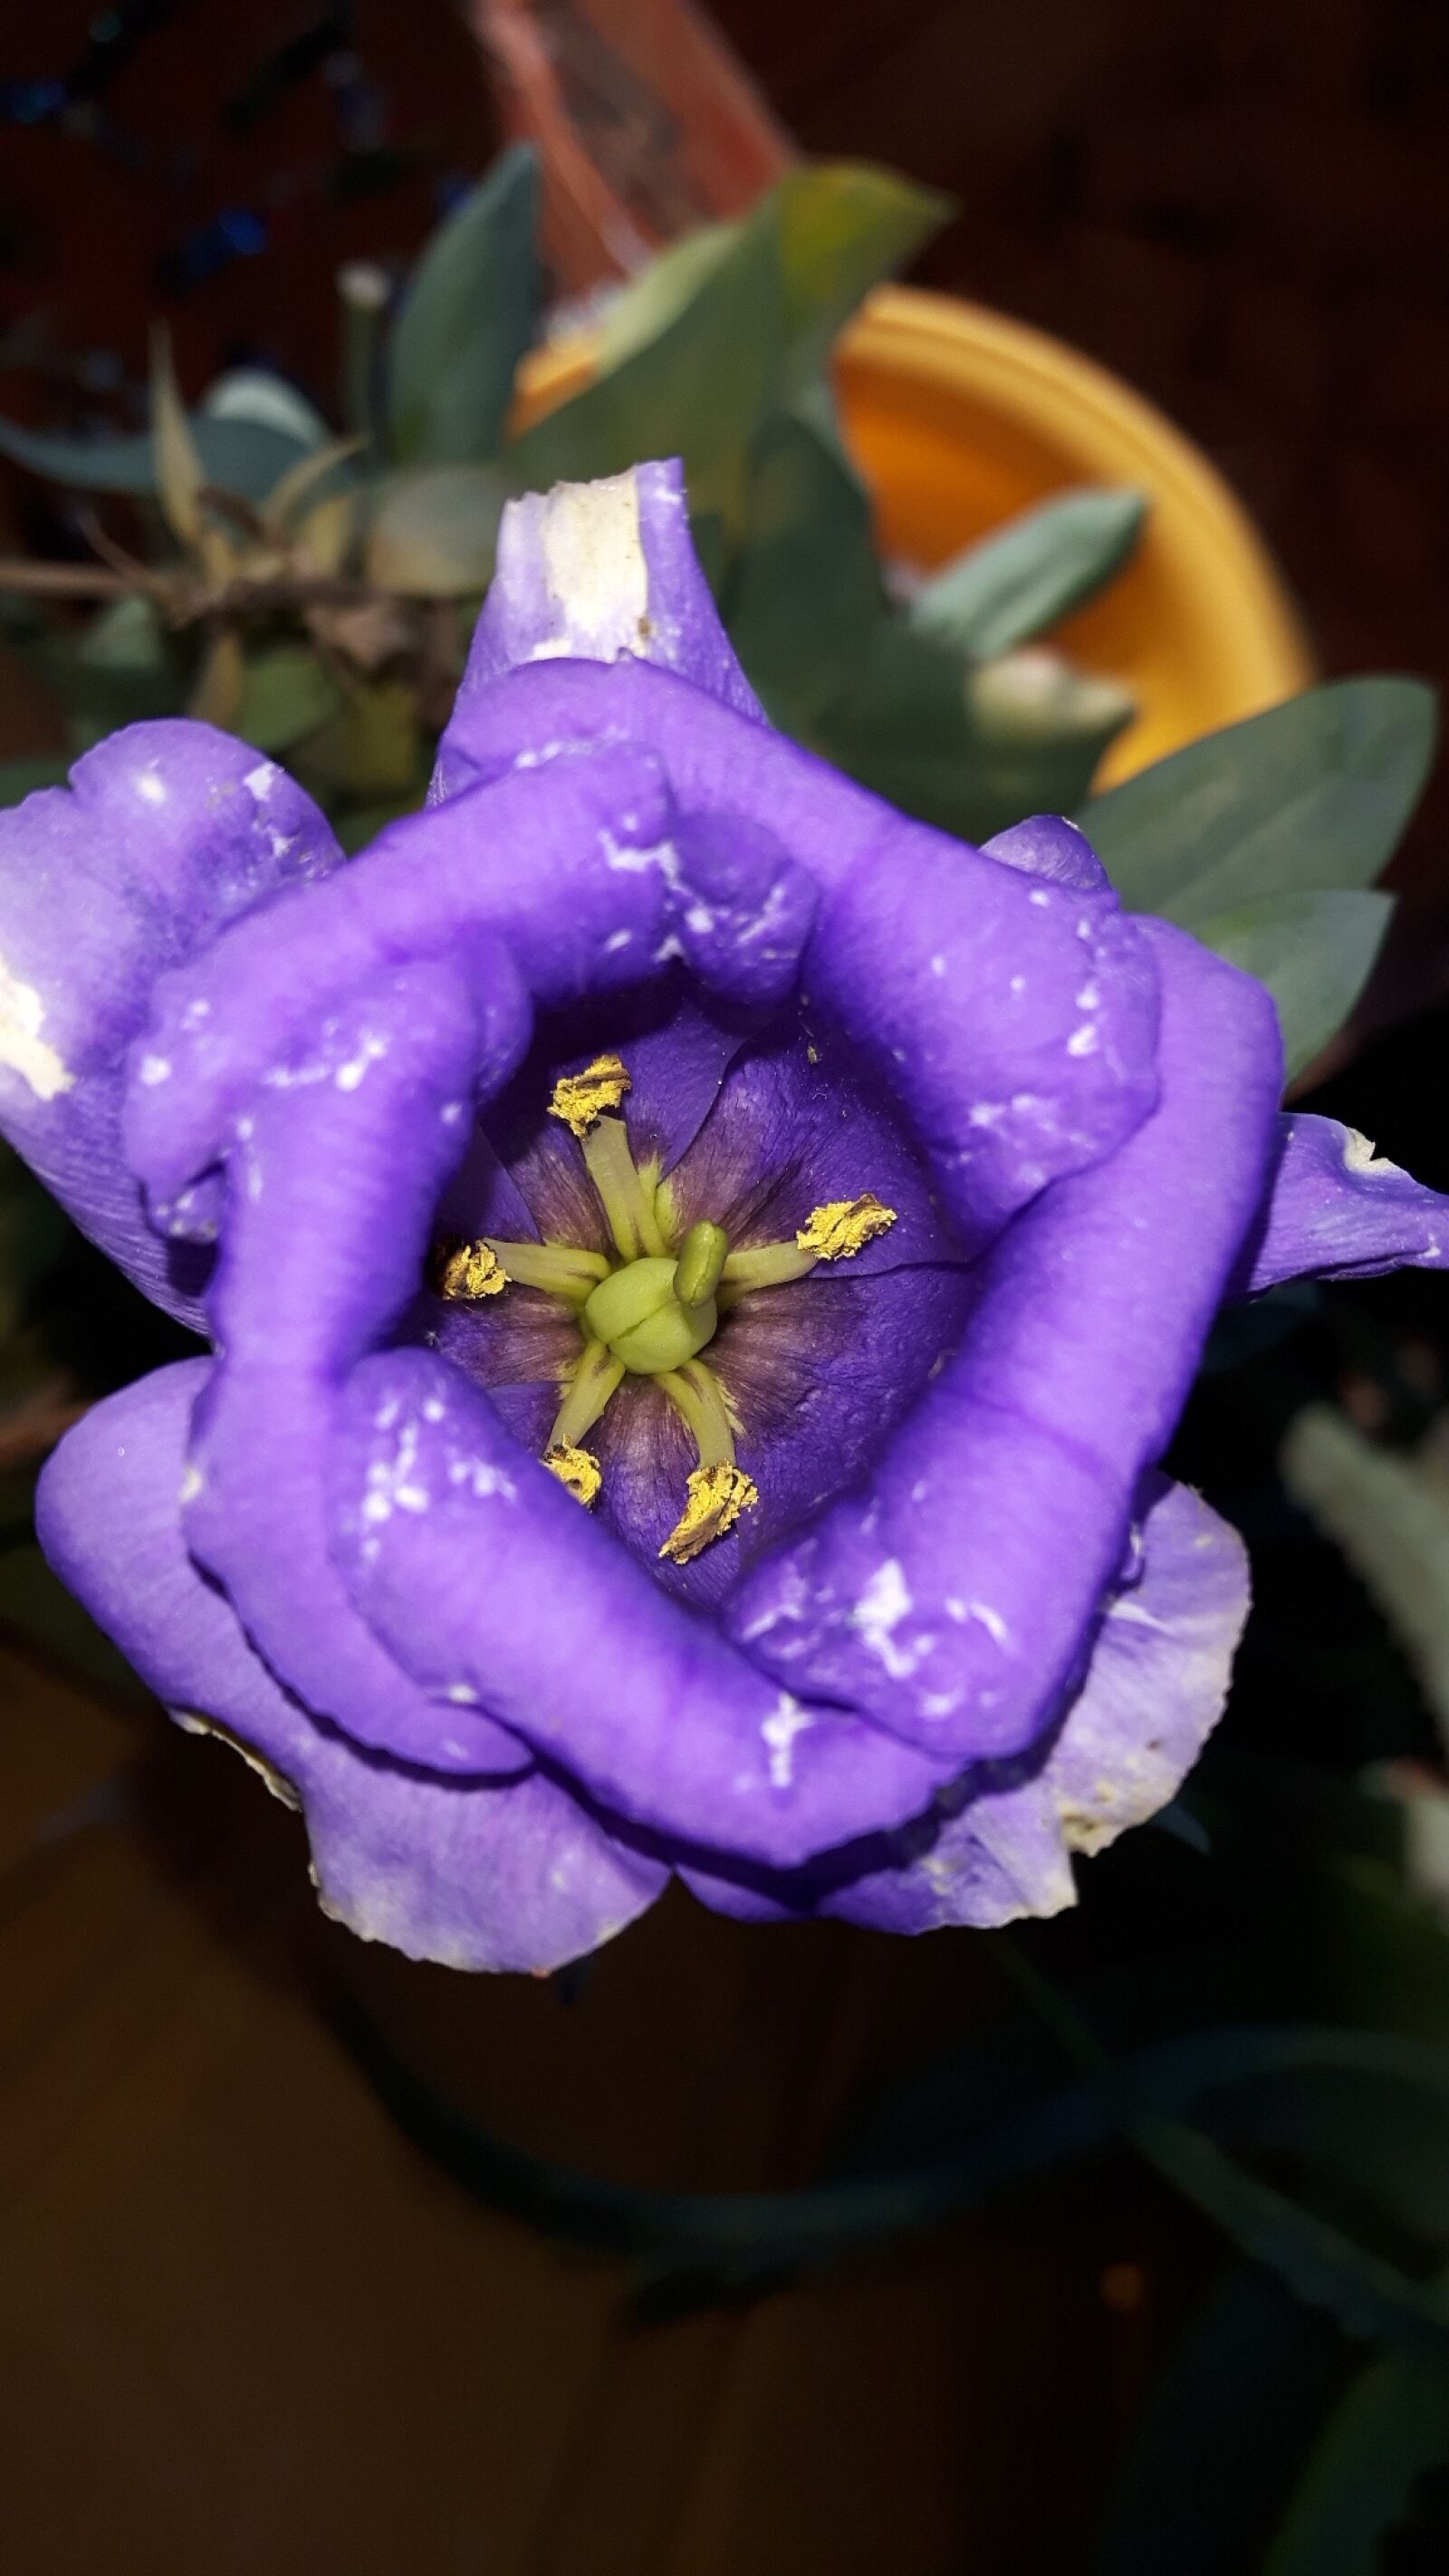 Samsung Galaxy S5 Neo sample photo. Flower, garden, nature photography